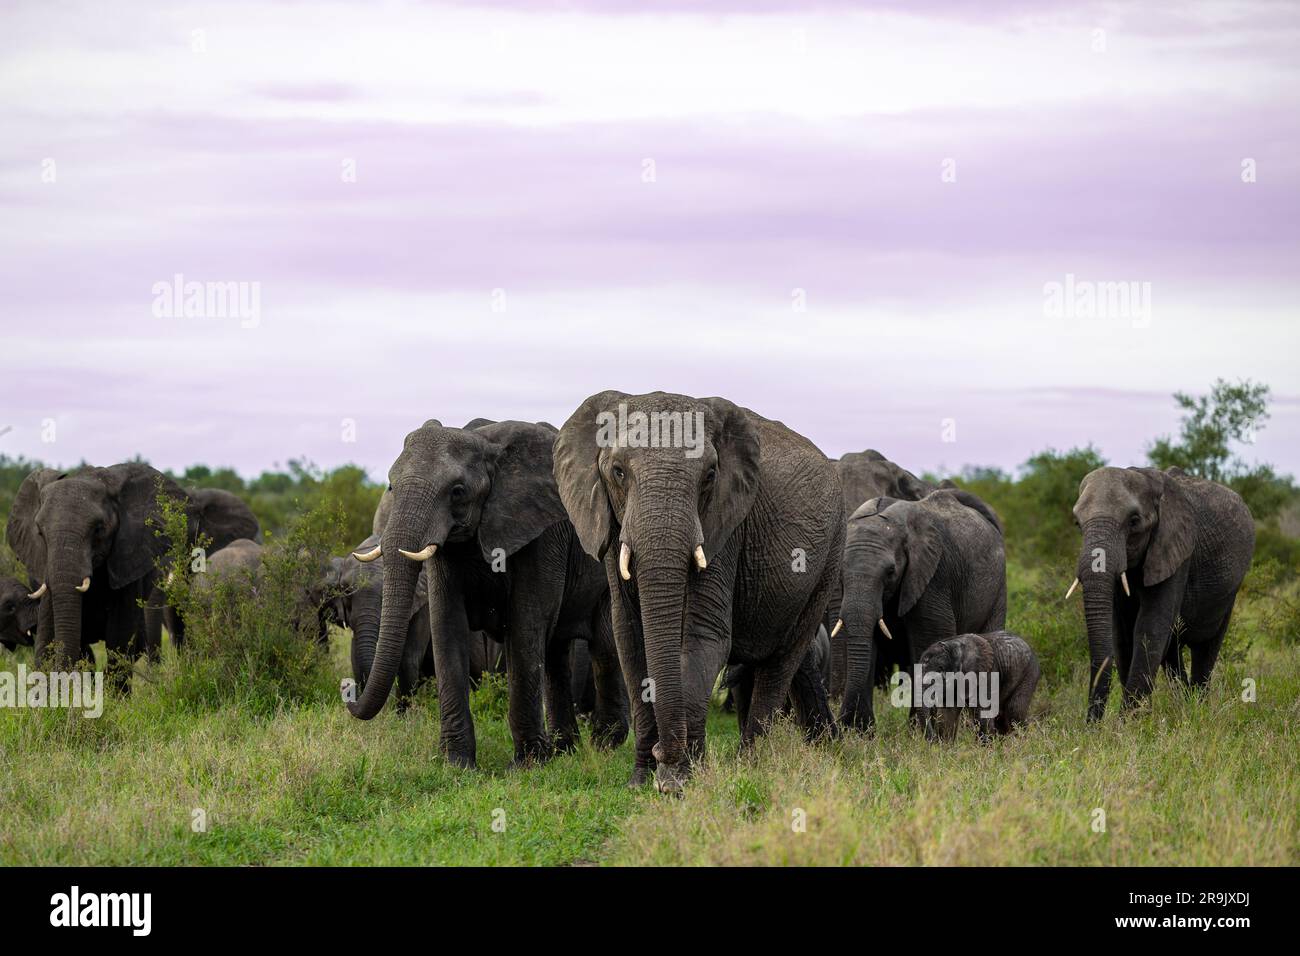 A herd of elephant, Loxodonta africana, walking through the grass. Stock Photo